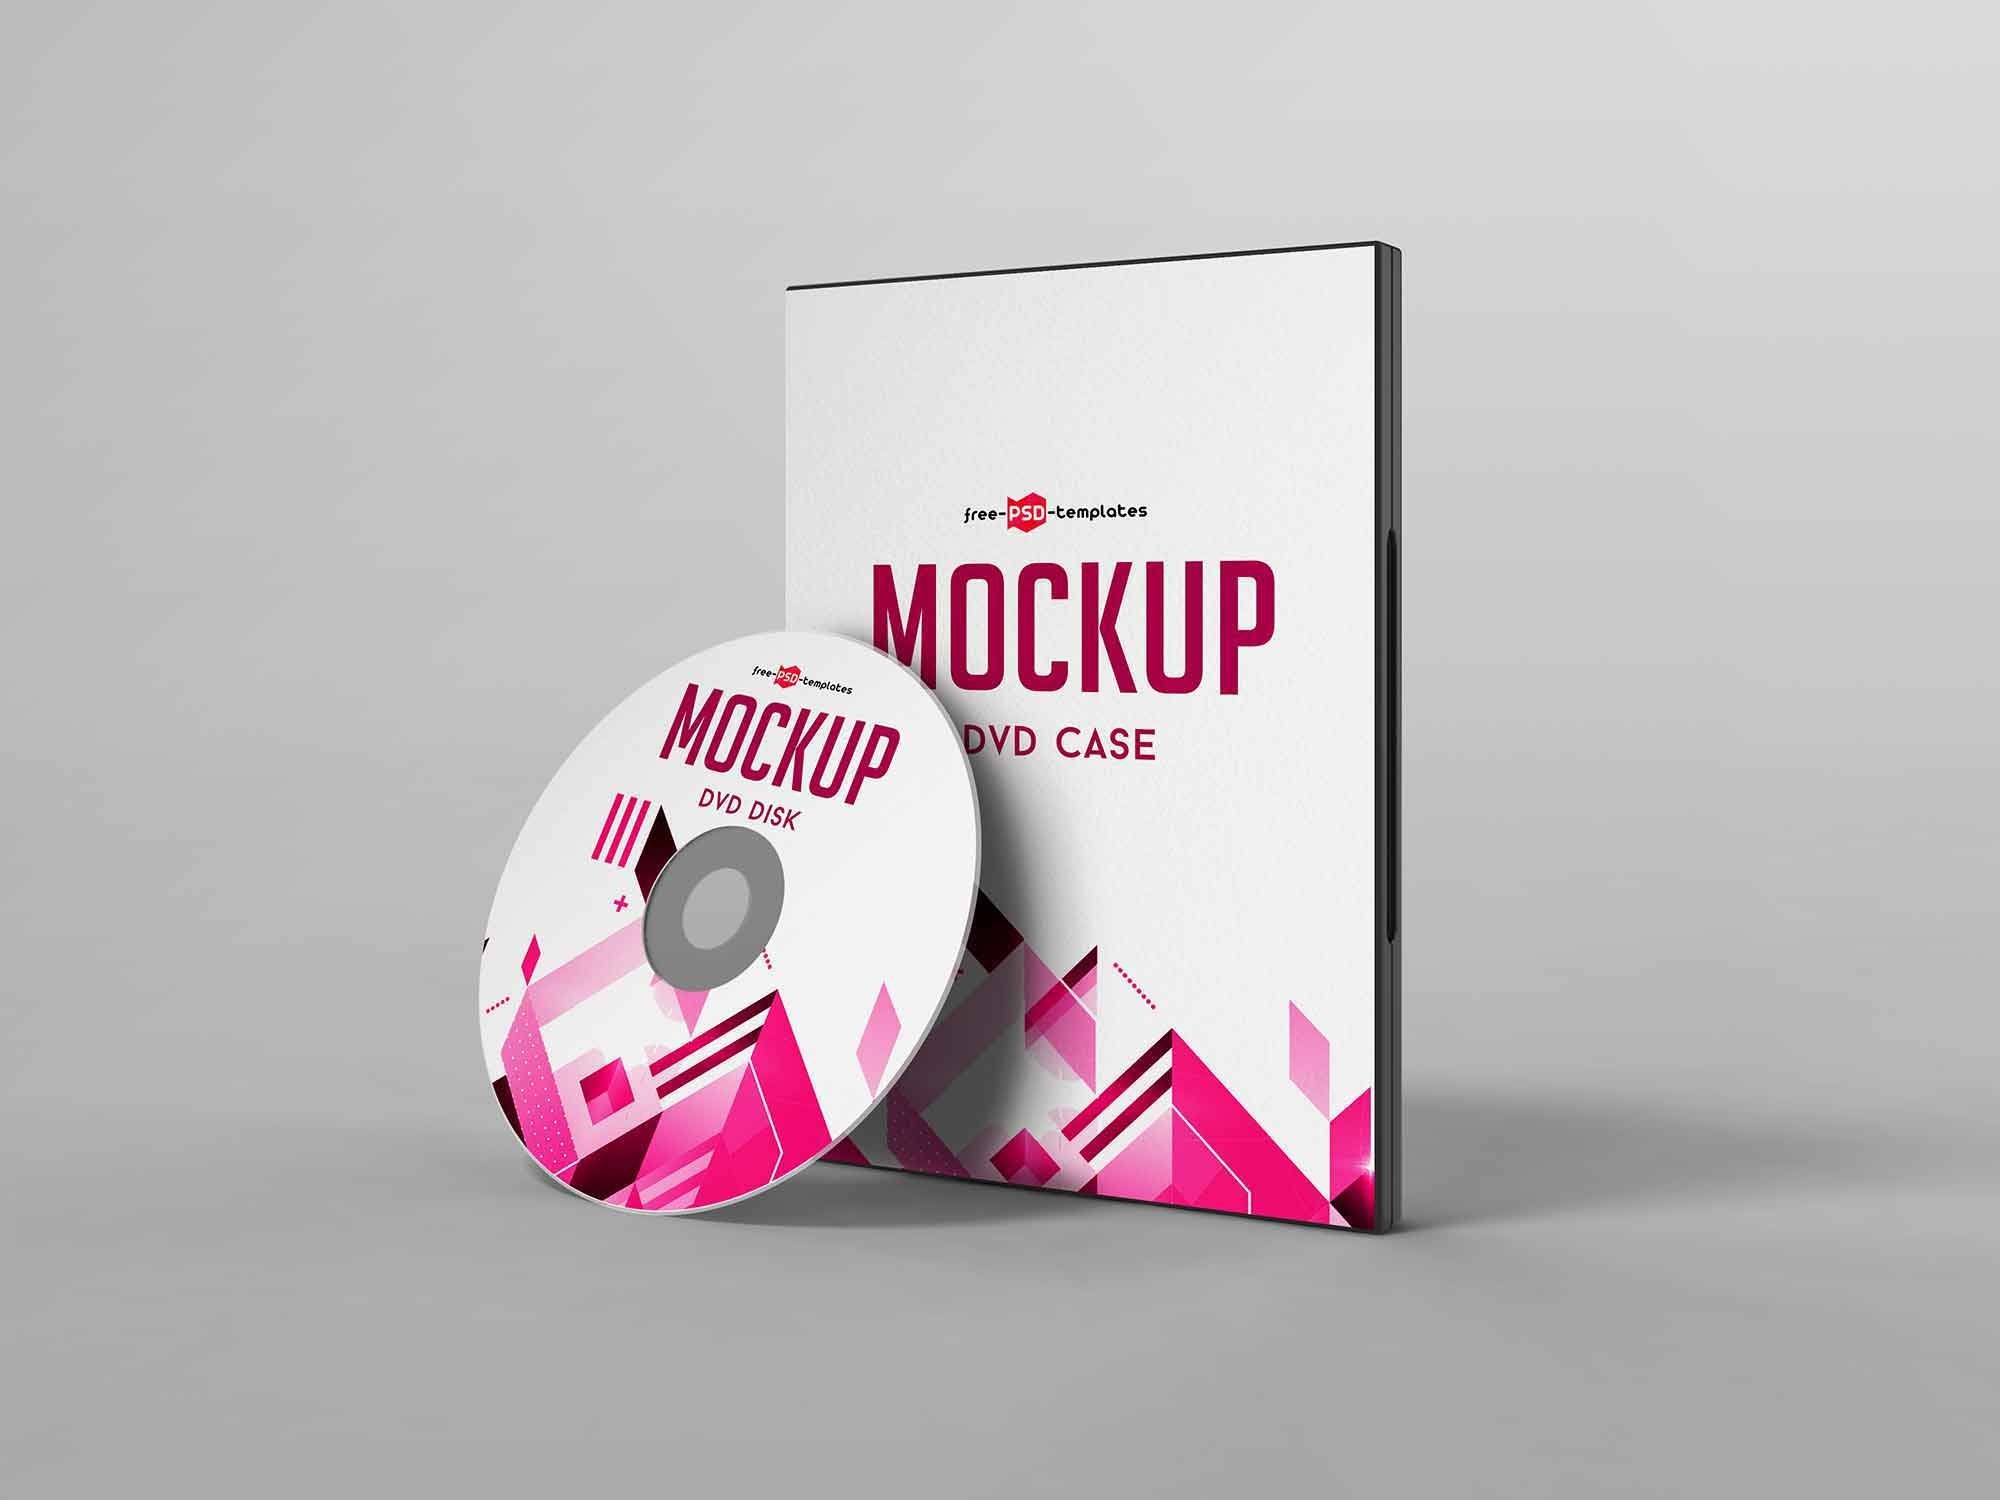 Free DVD Case Mockup